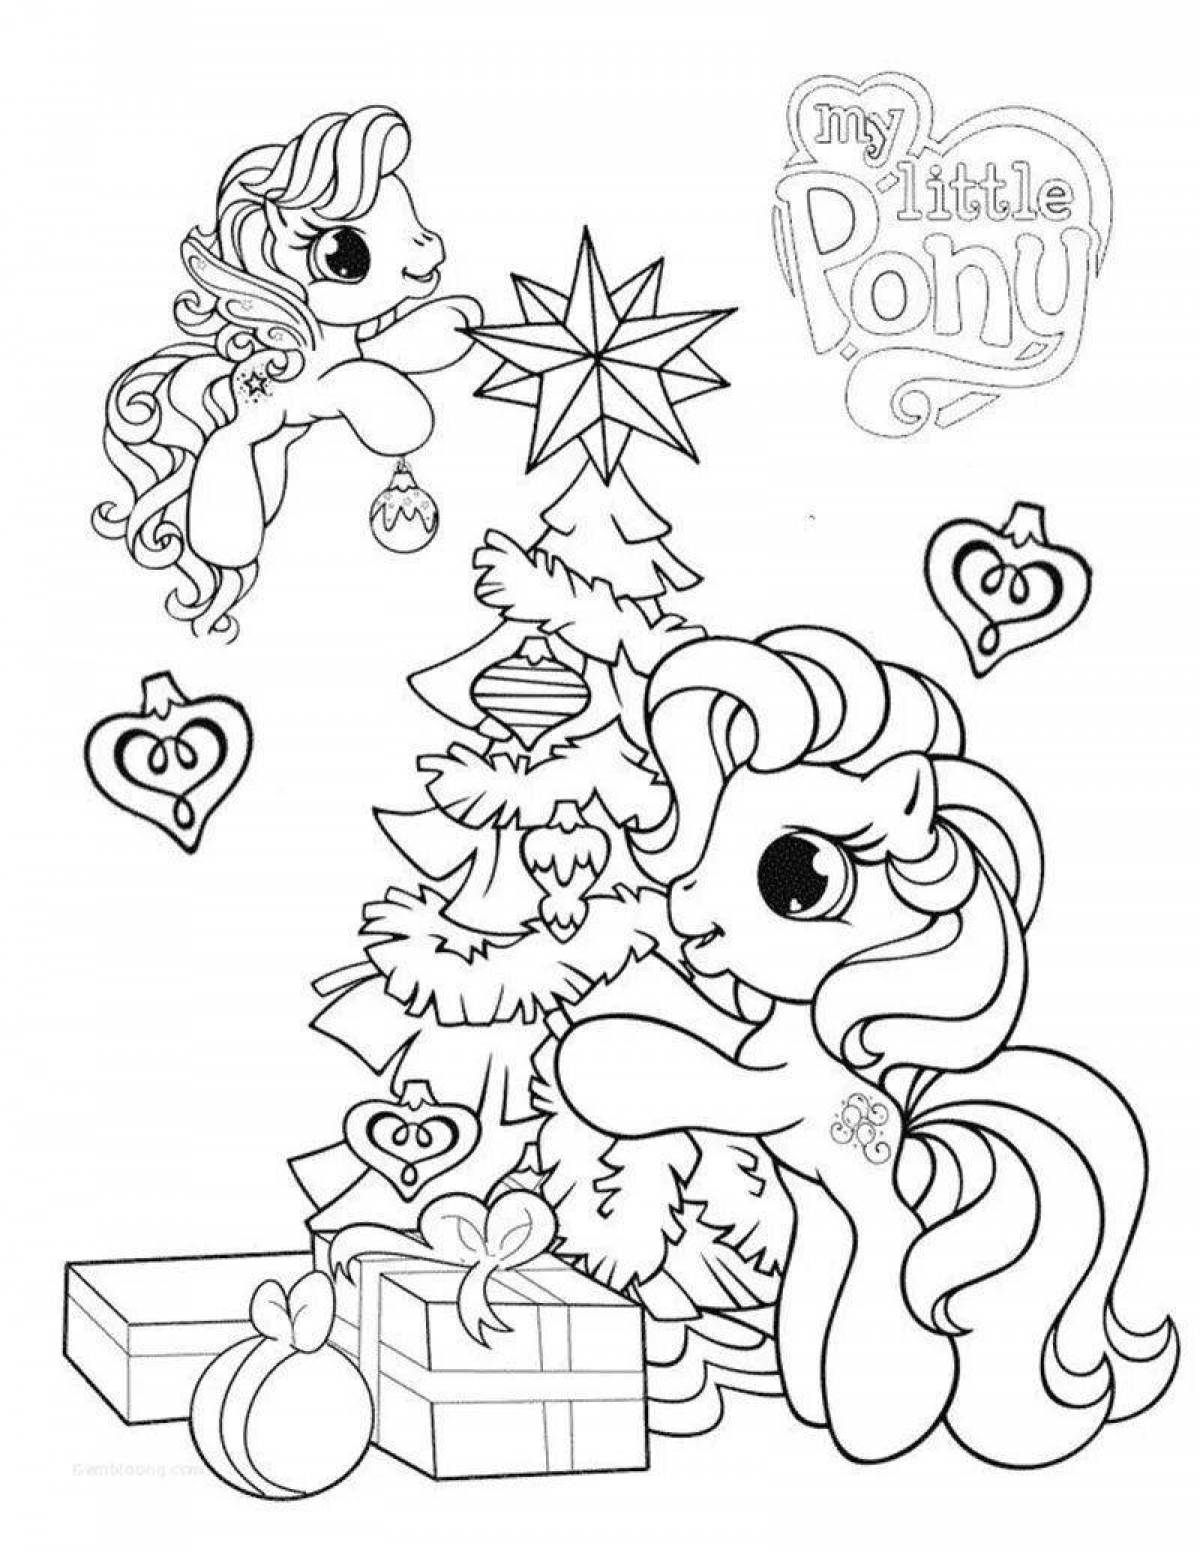 Coloring page nice christmas ponies